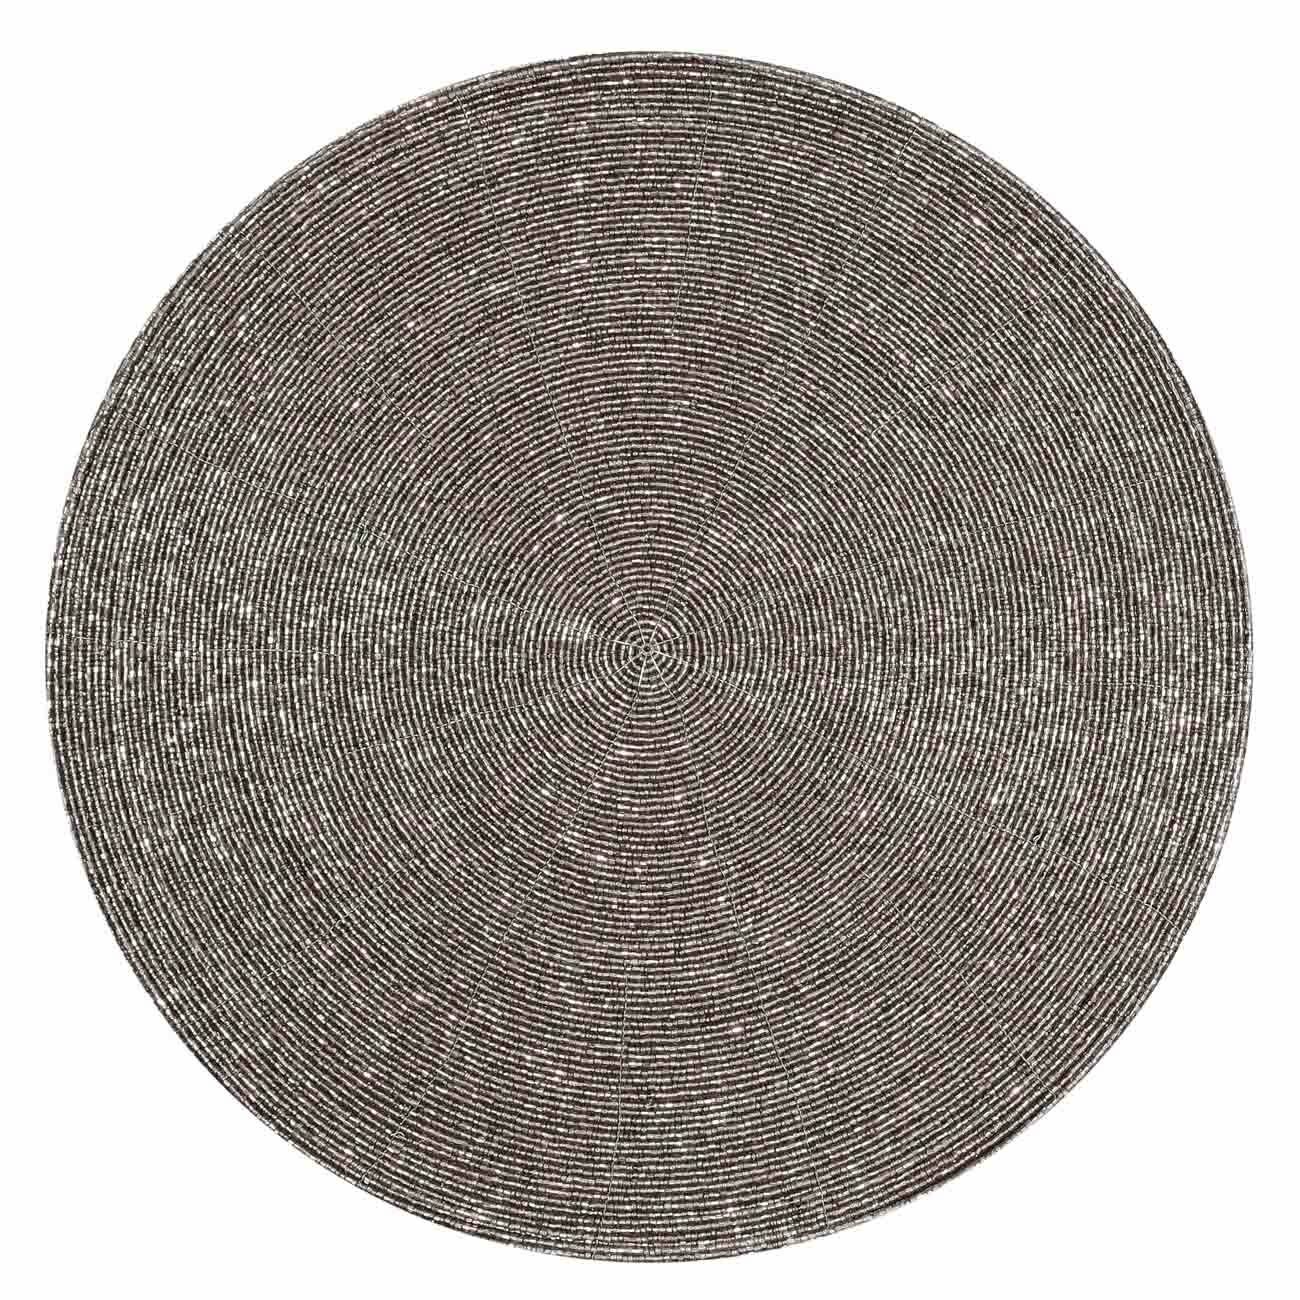 (W)Салфетка под приборы 36 см бисер круглая серебристо-серая Rotation beads